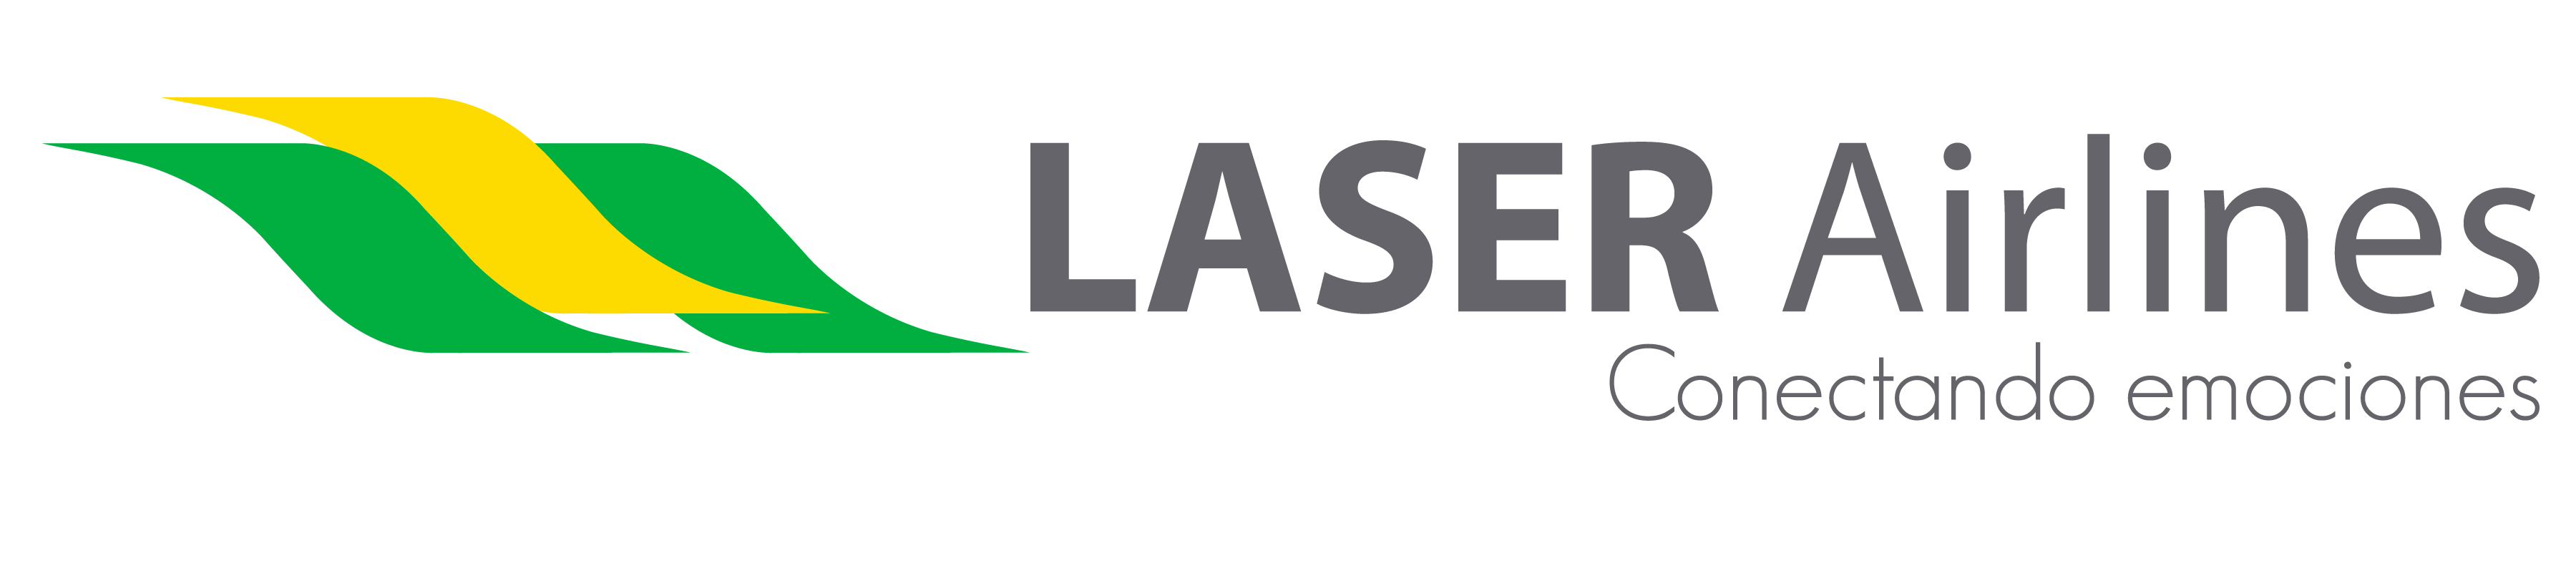 Logo Laser nueva imagen